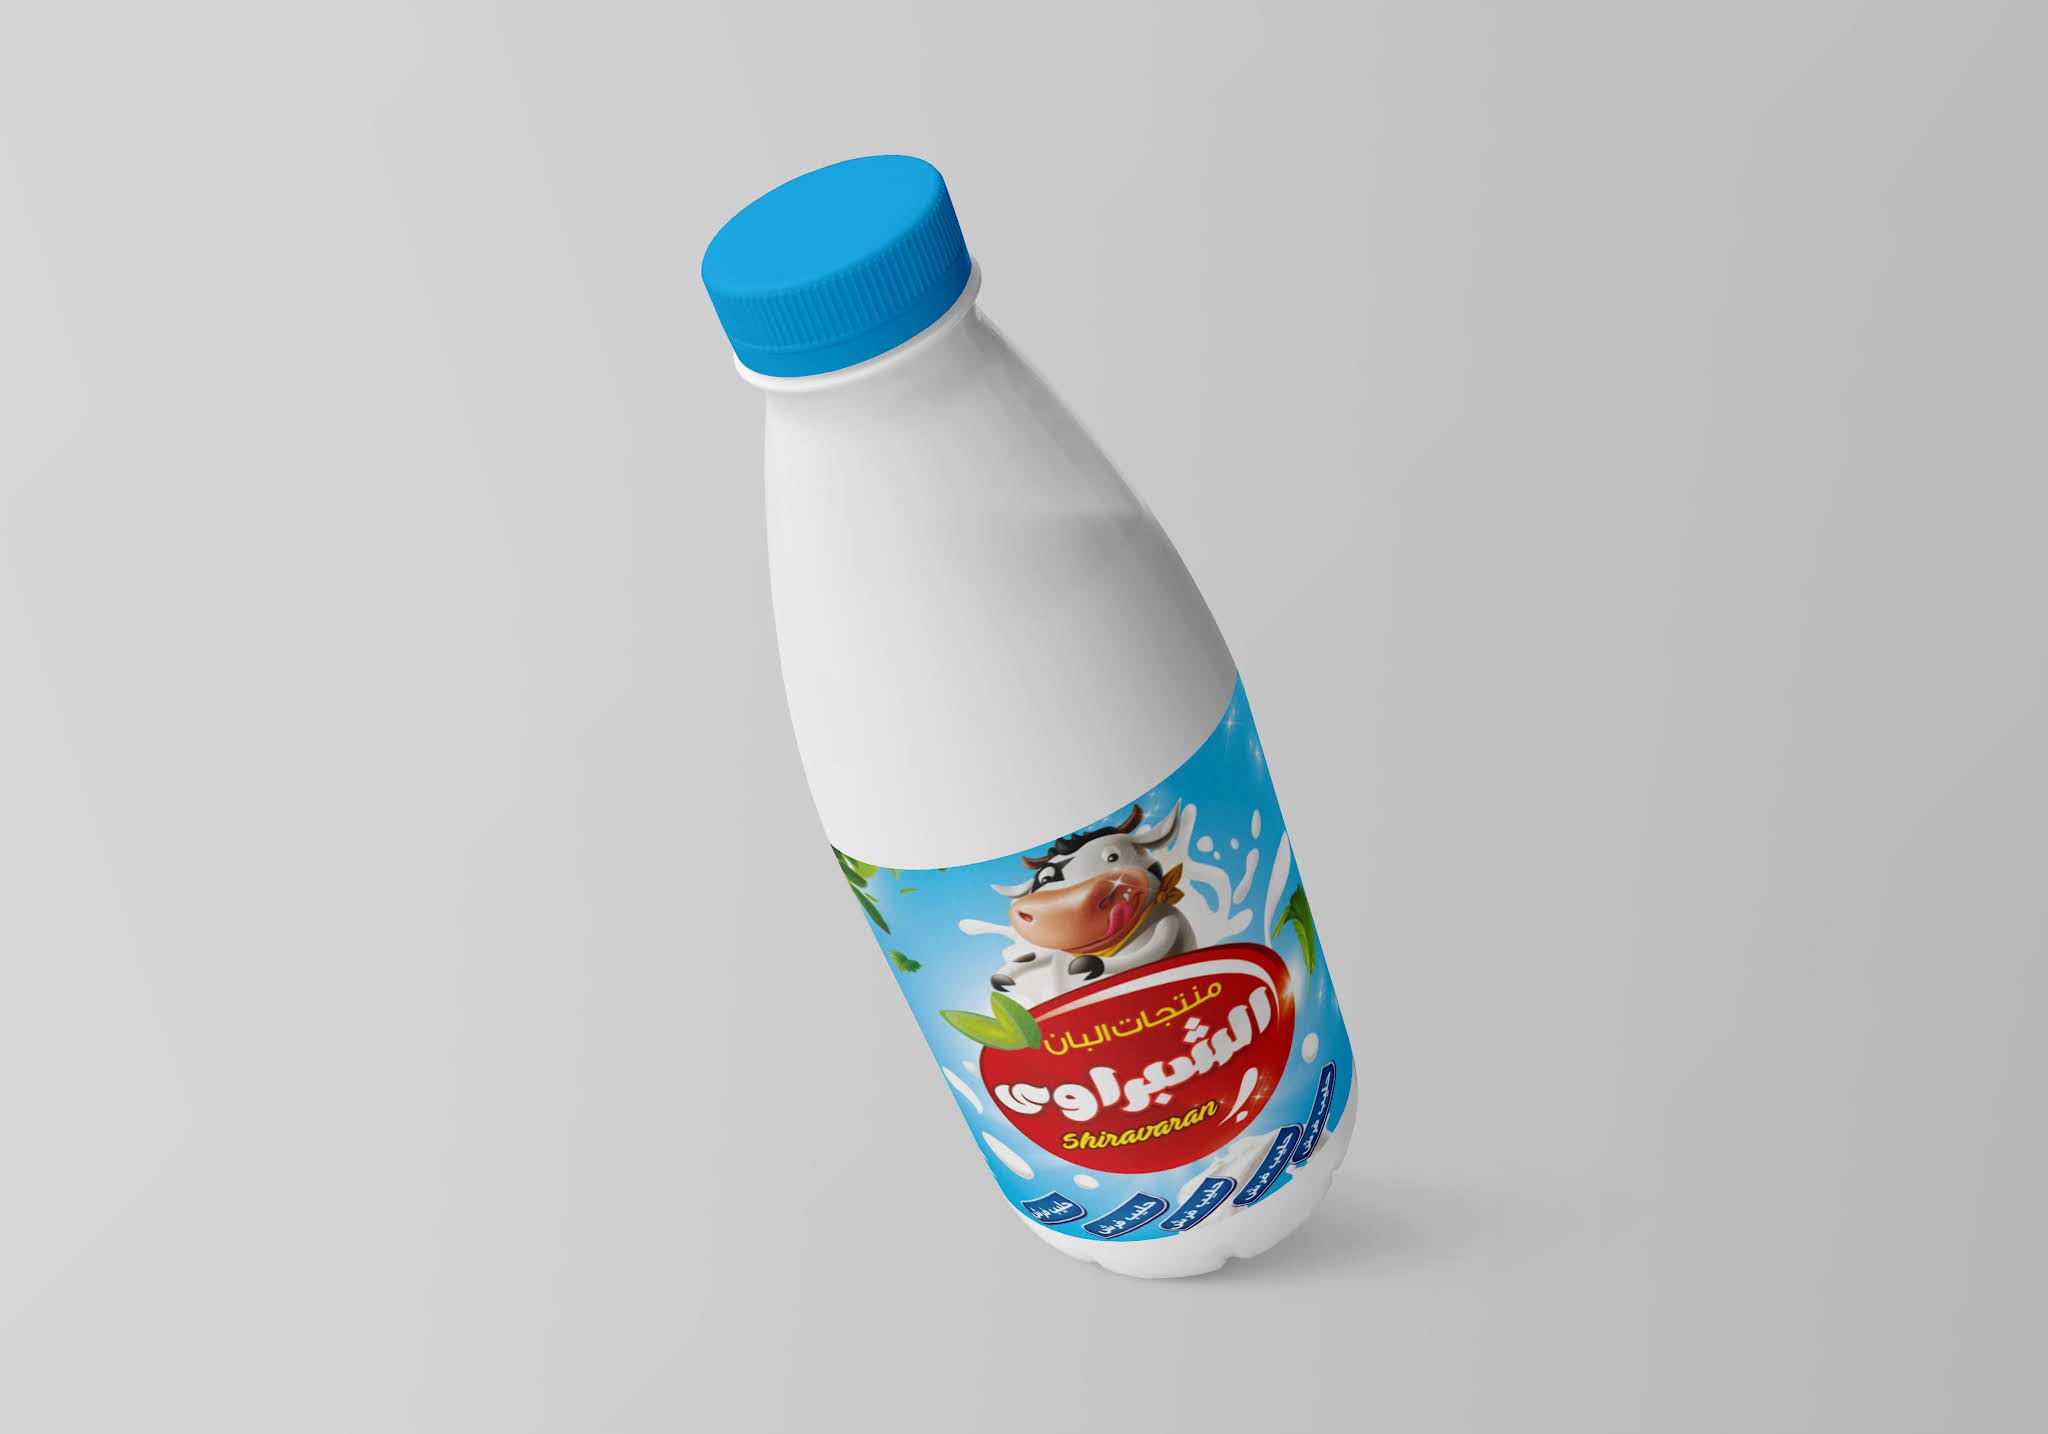 Download a milk bottle mockup to display business designs